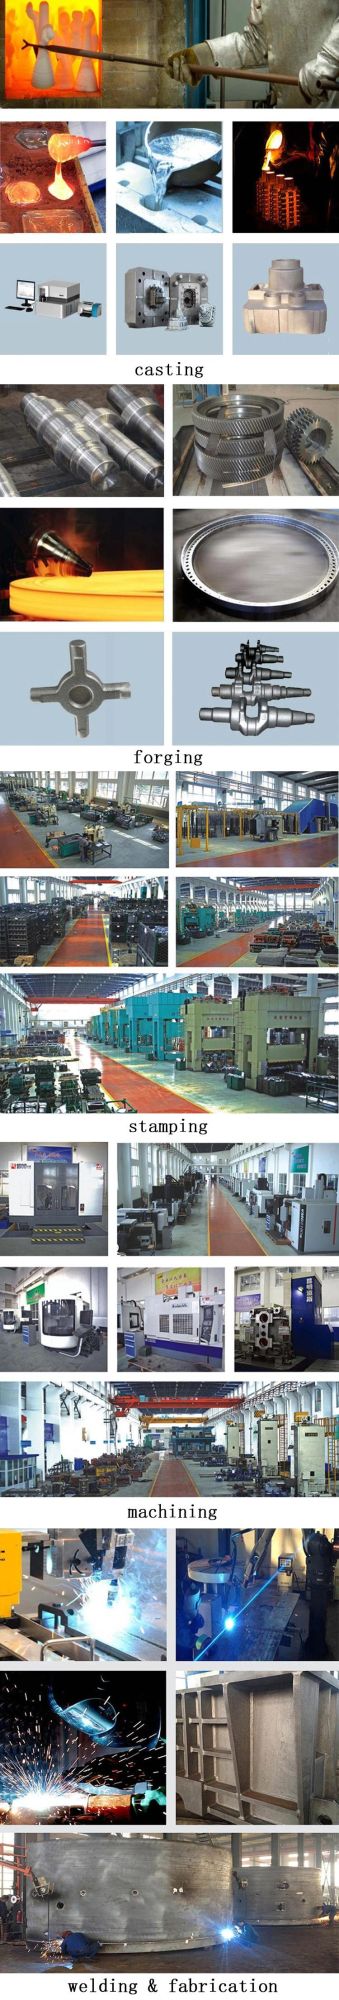 Densen Customized China Custom Grey and Ductile Iron Casting + CNC Machining